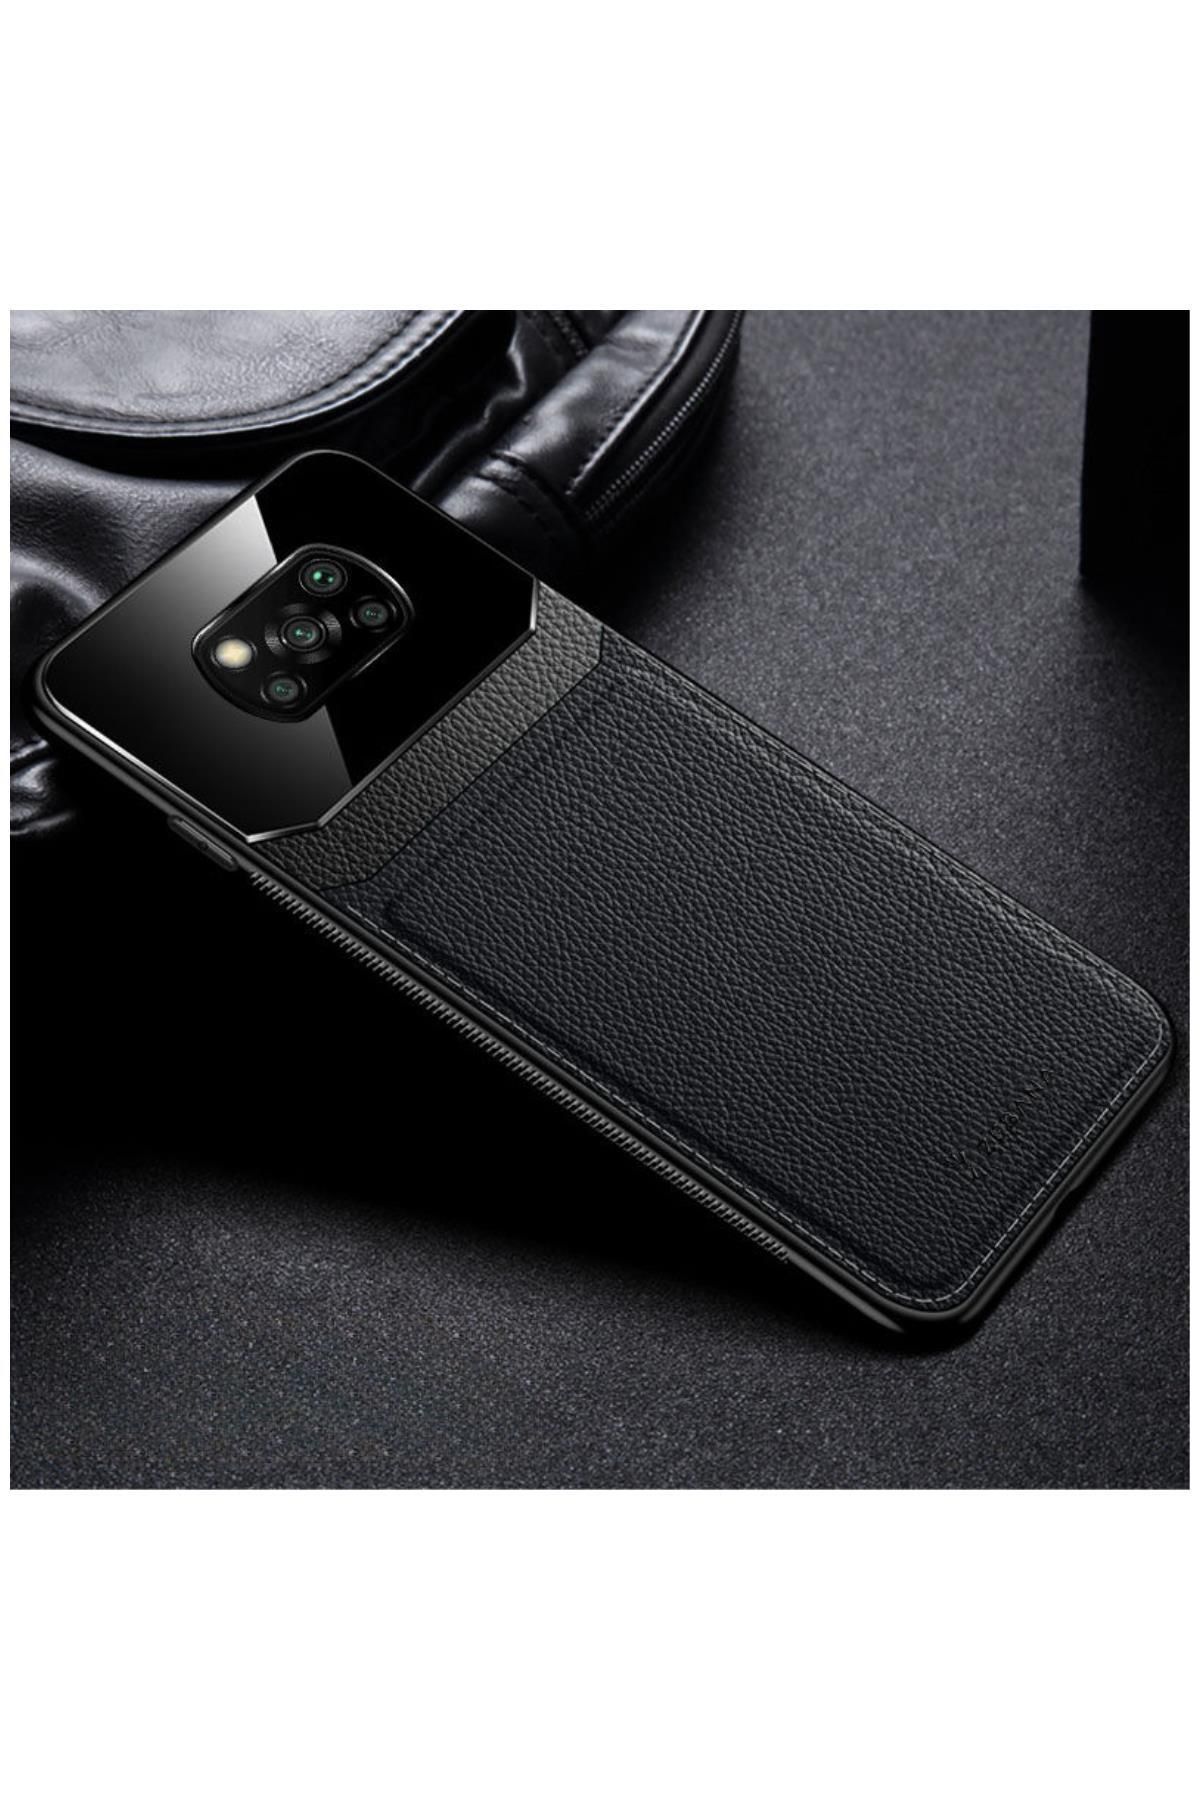 Zebana Xiaomi Poco X3 Uyumlu Kılıf Lens Deri Kılıf Siyah